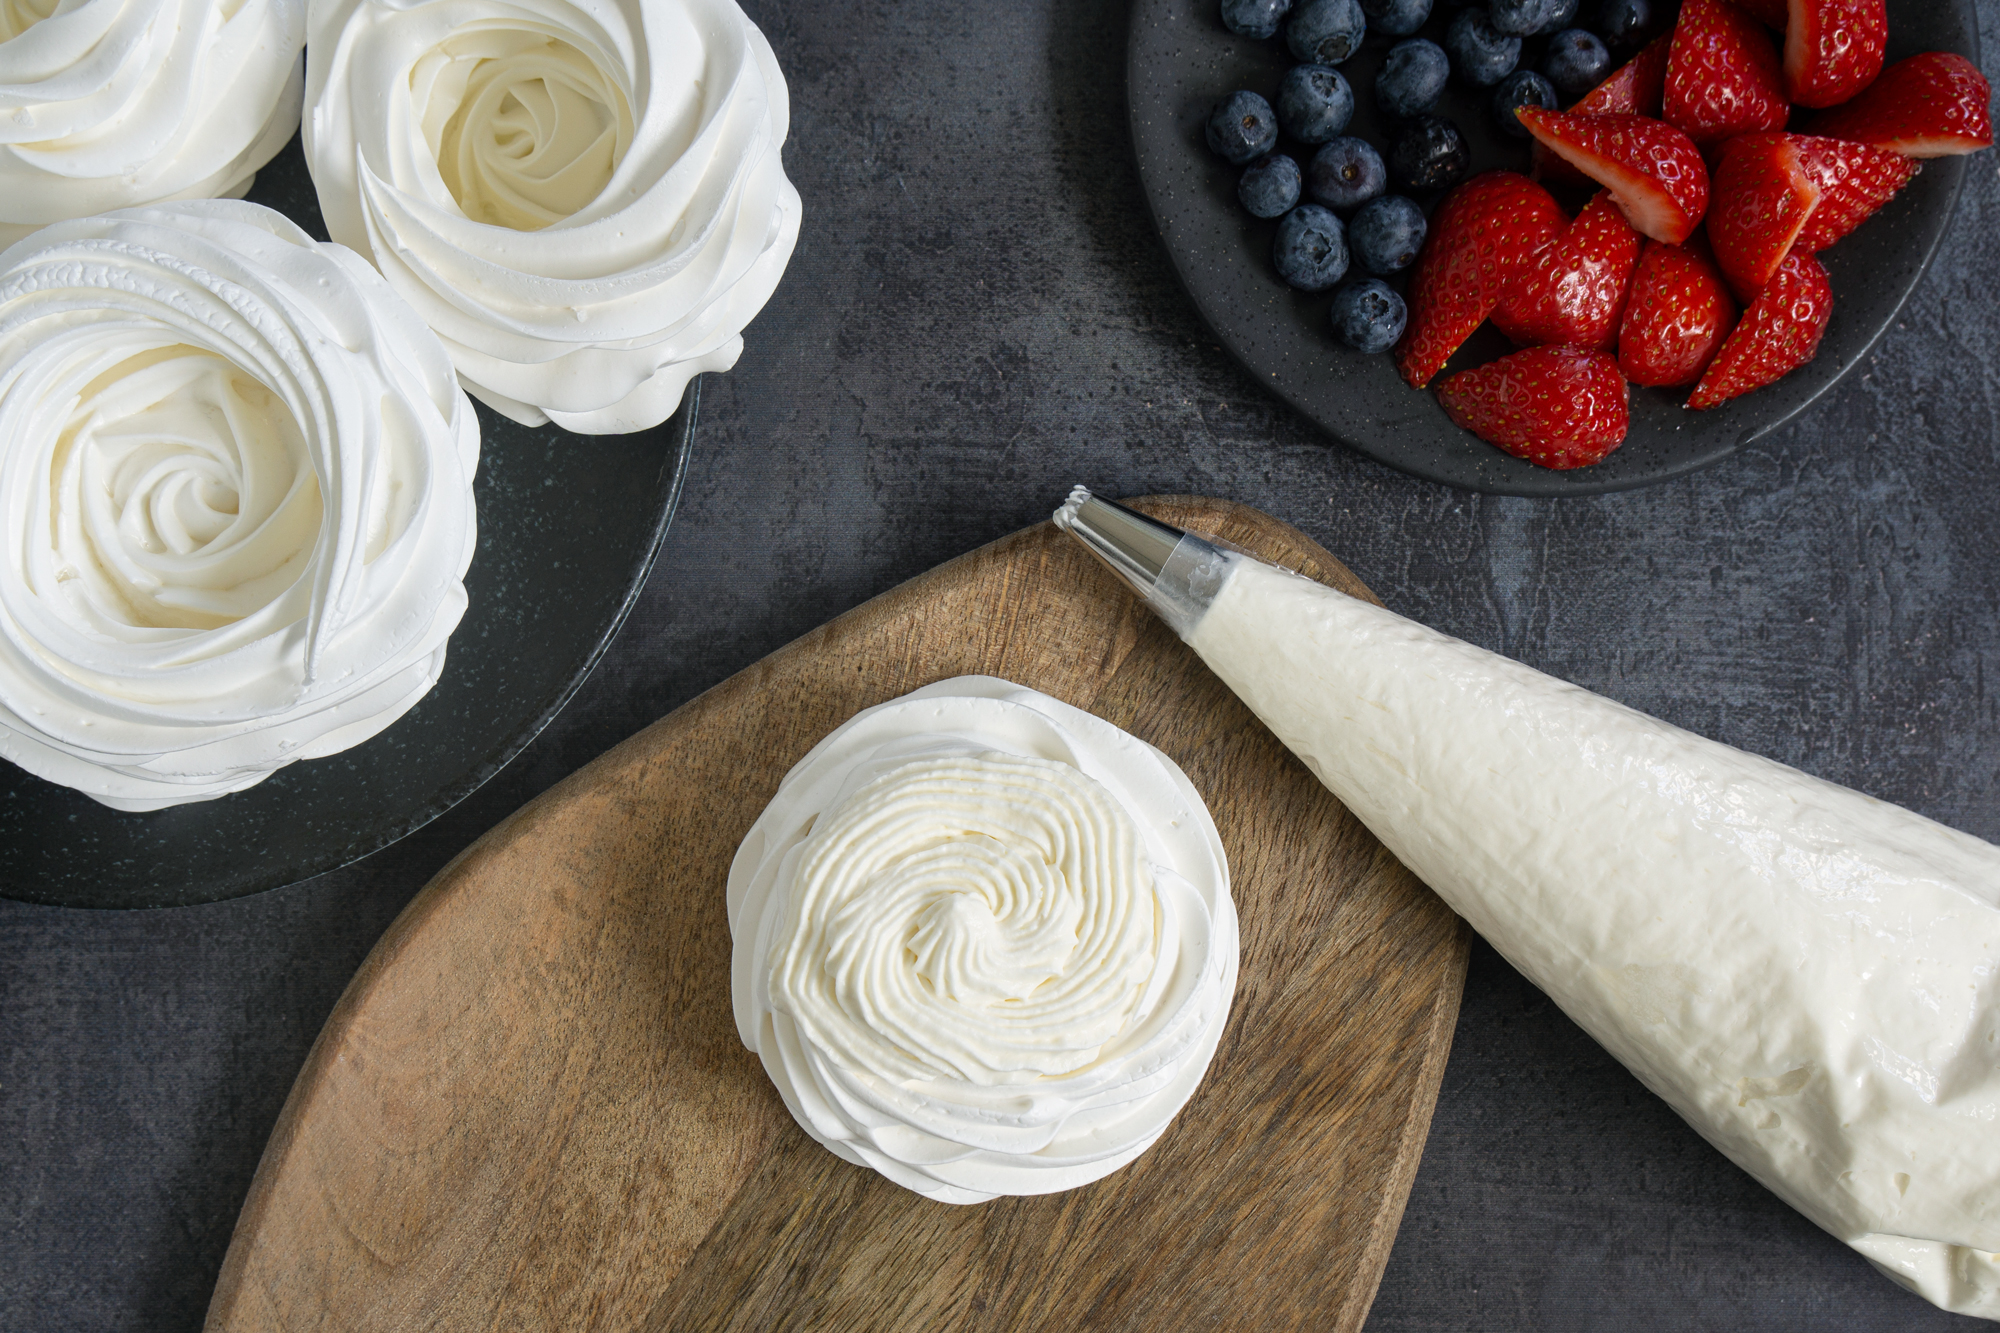 Fill meringues with cream